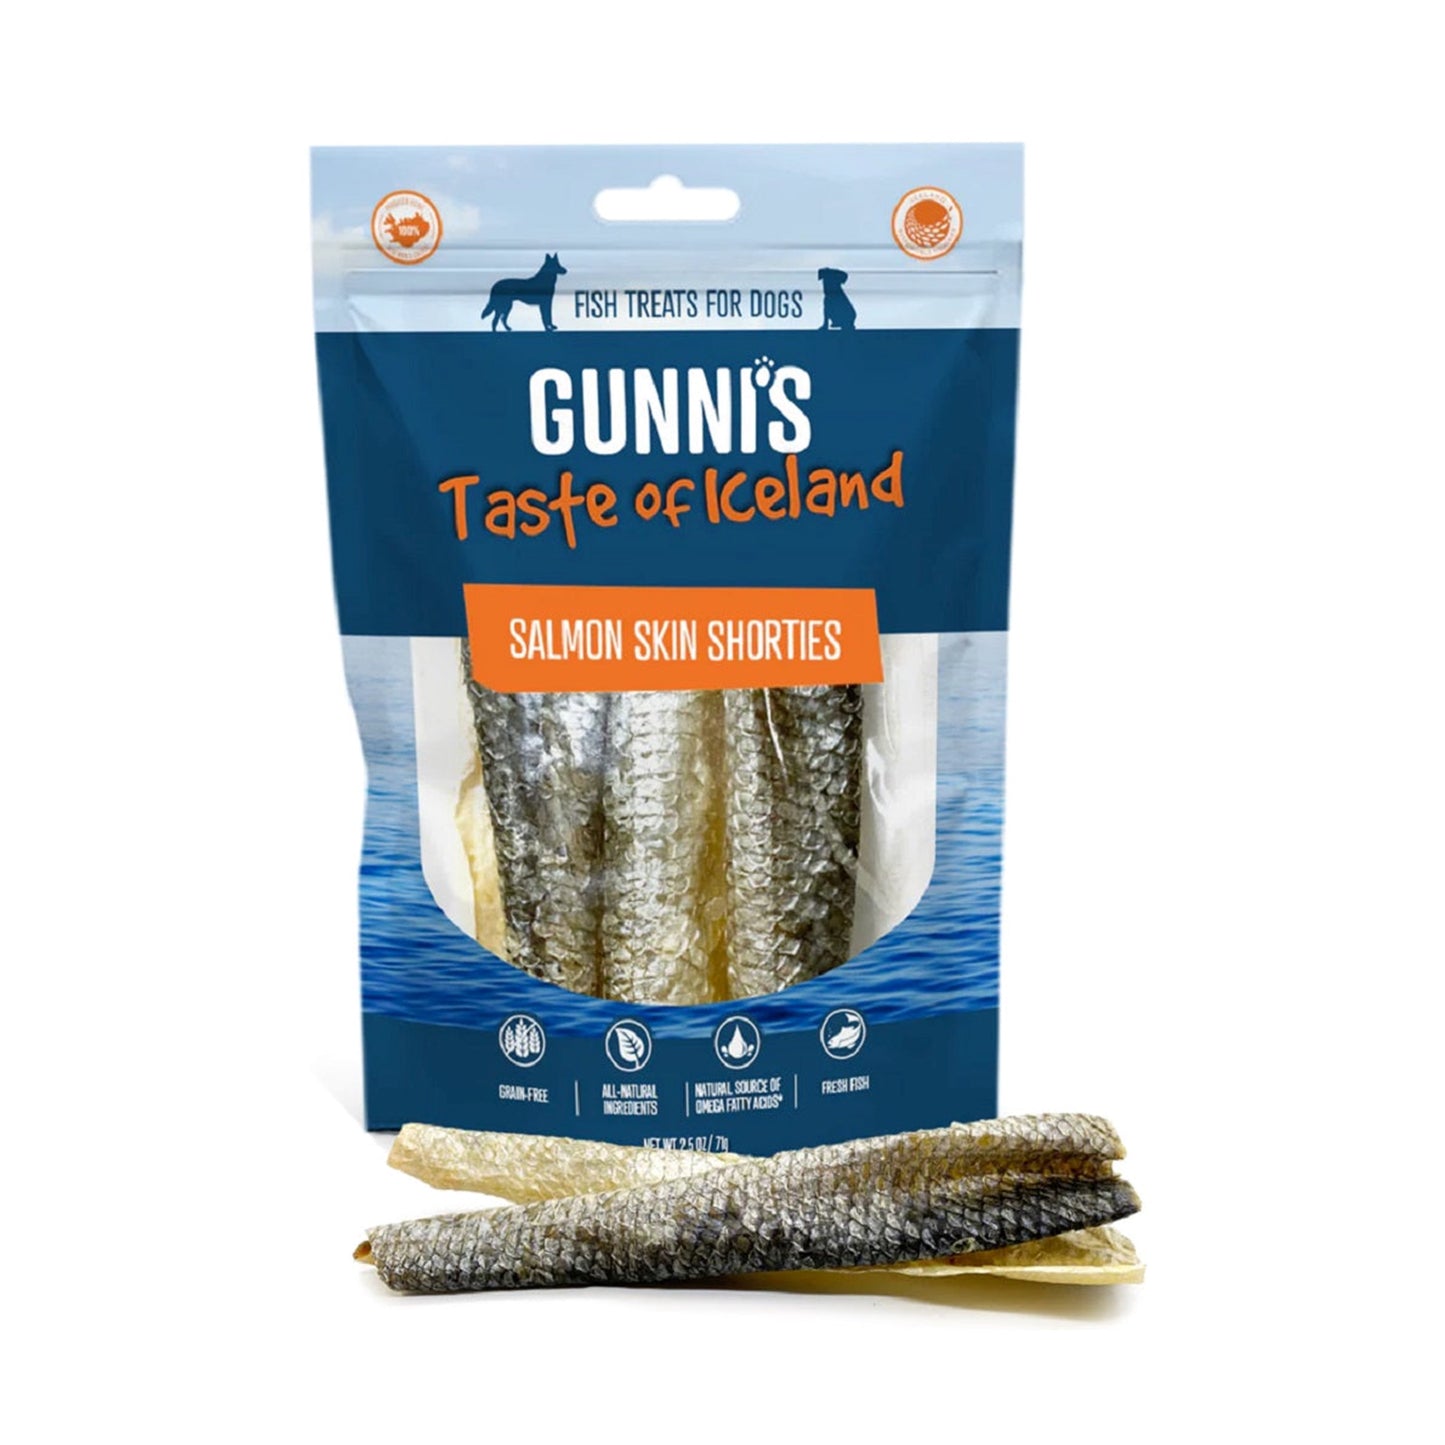 Gunnis Salmon Skin Shorties, 56g